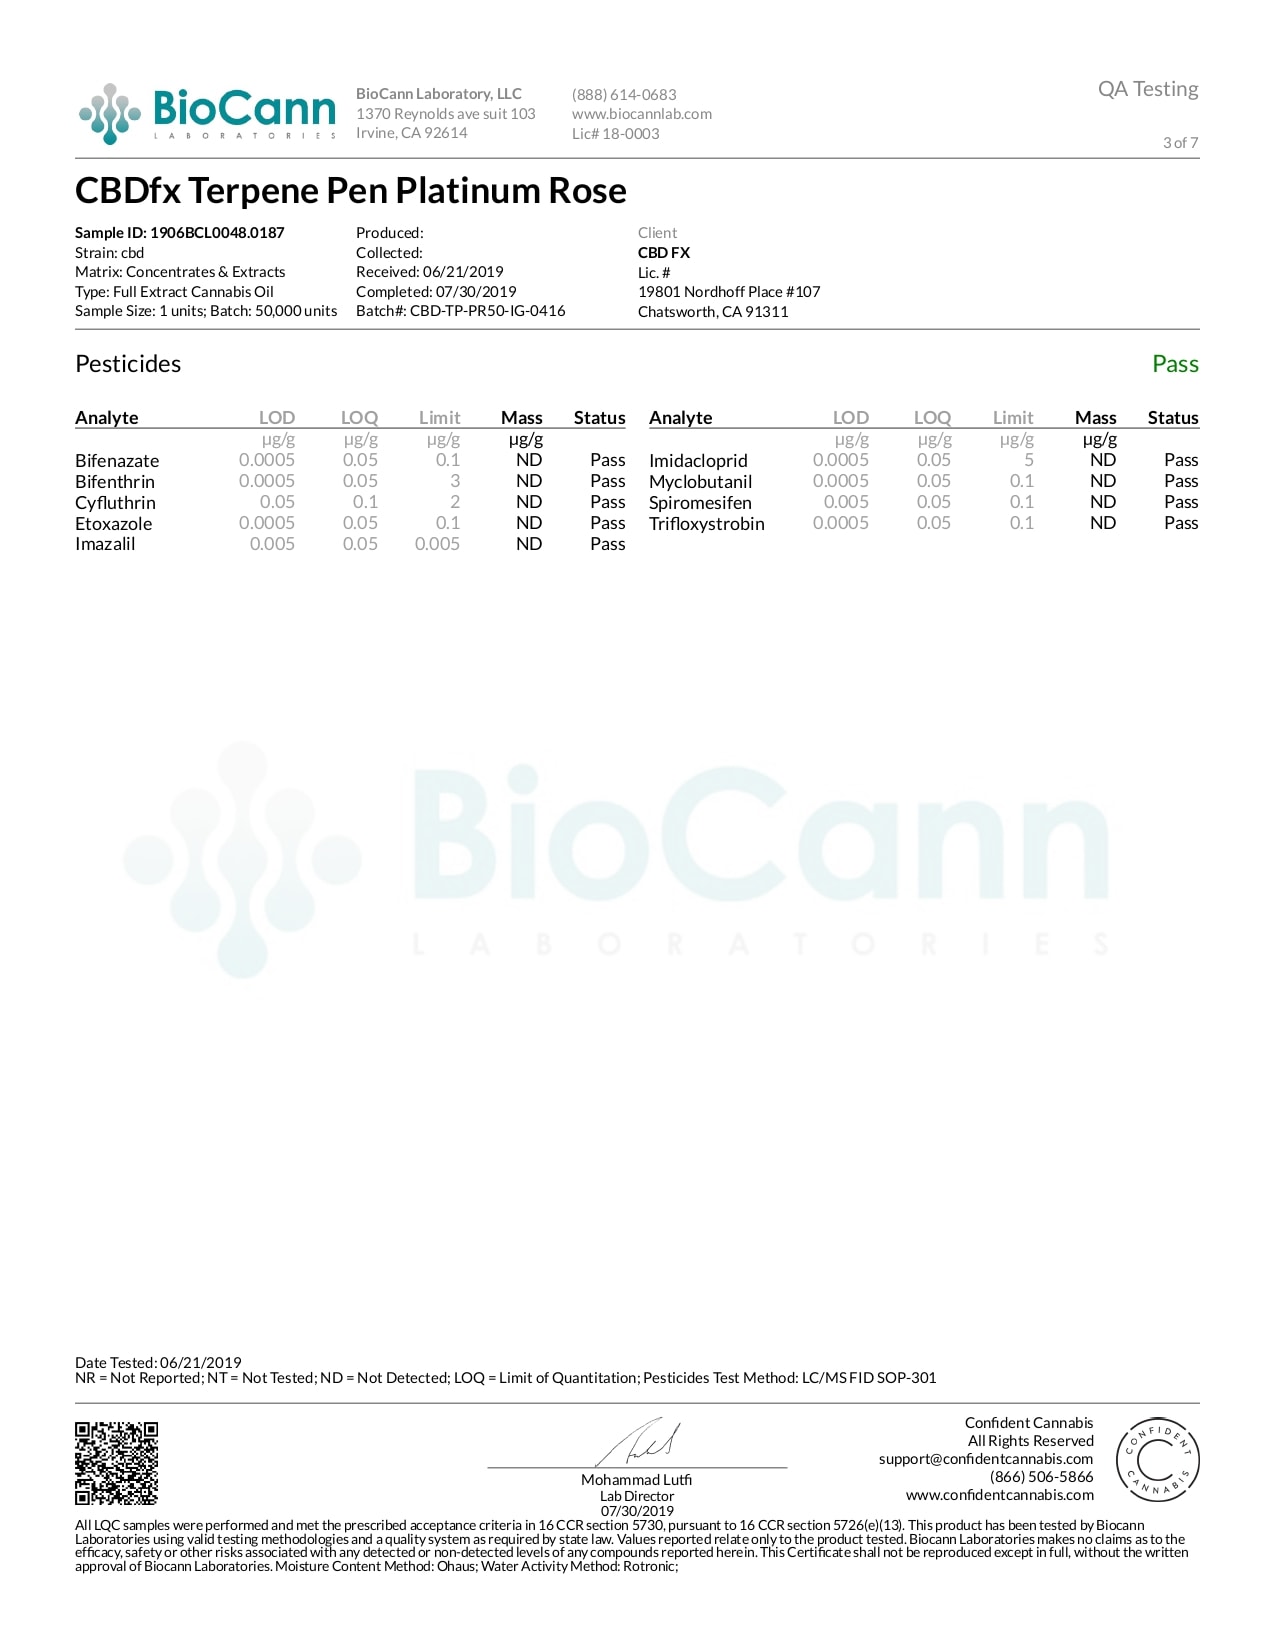 CBDfx Platinum Rose Lab Report CBD Terpenes Vape Pen 50mg